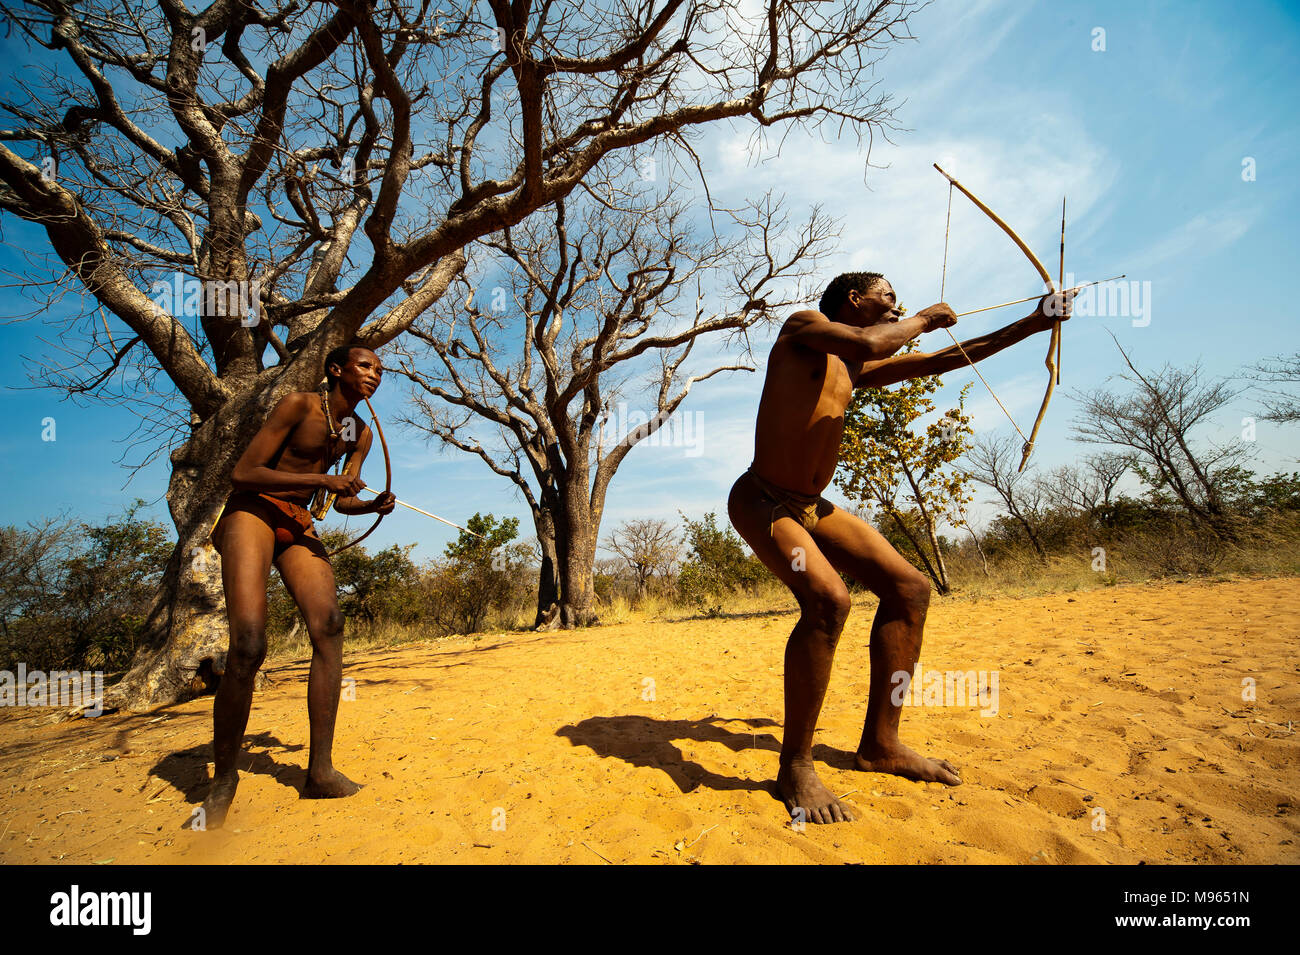 Ju/'Hoansi or San bushmen hunter simulates a hunt with bow and arrow at their village, Grashoek, Namibia Stock Photo